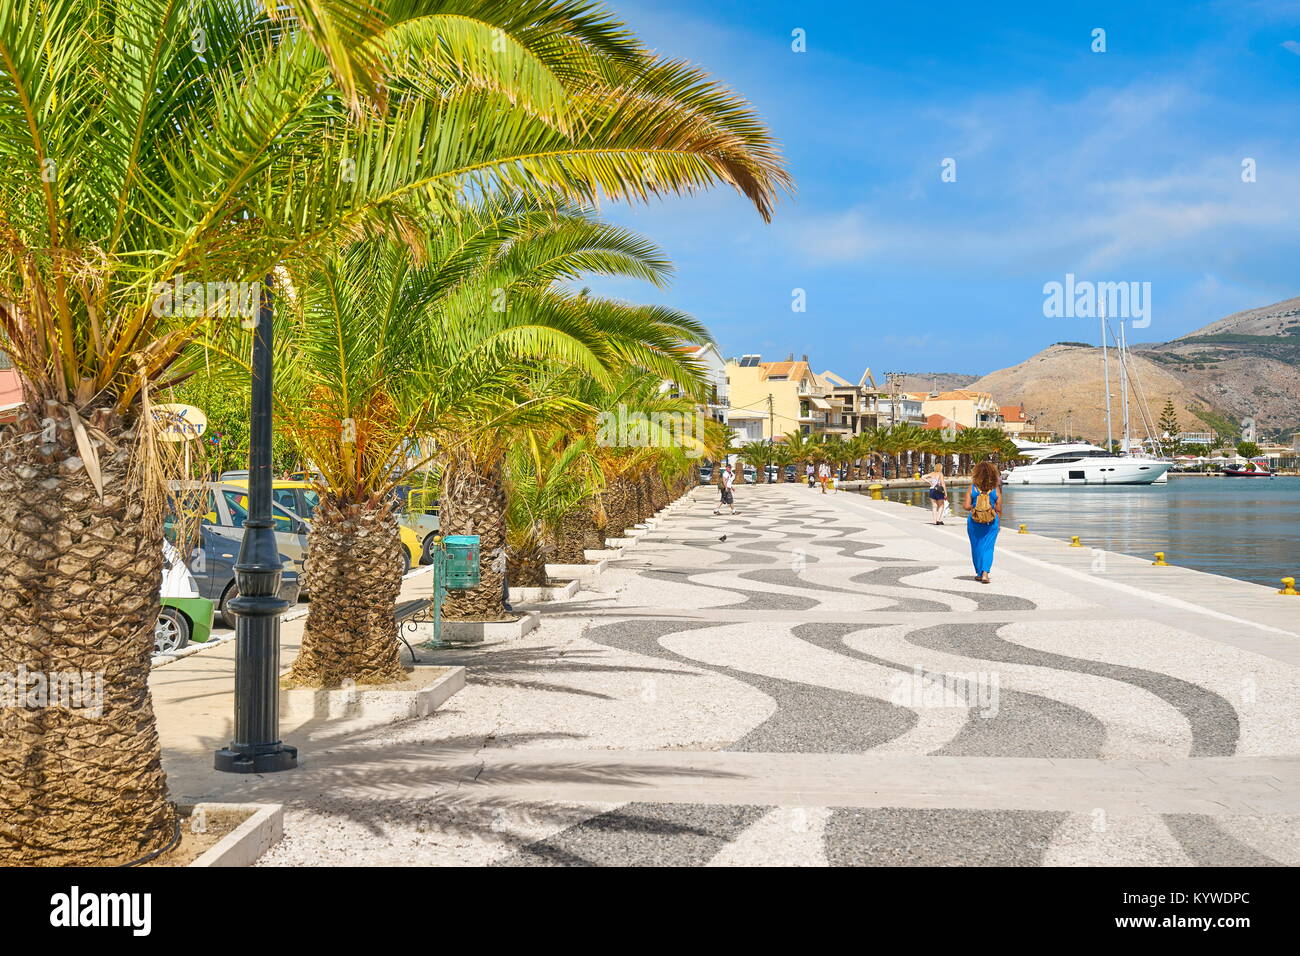 Promenade at Argostoli town, Kefalonia Island, Greece Stock Photo